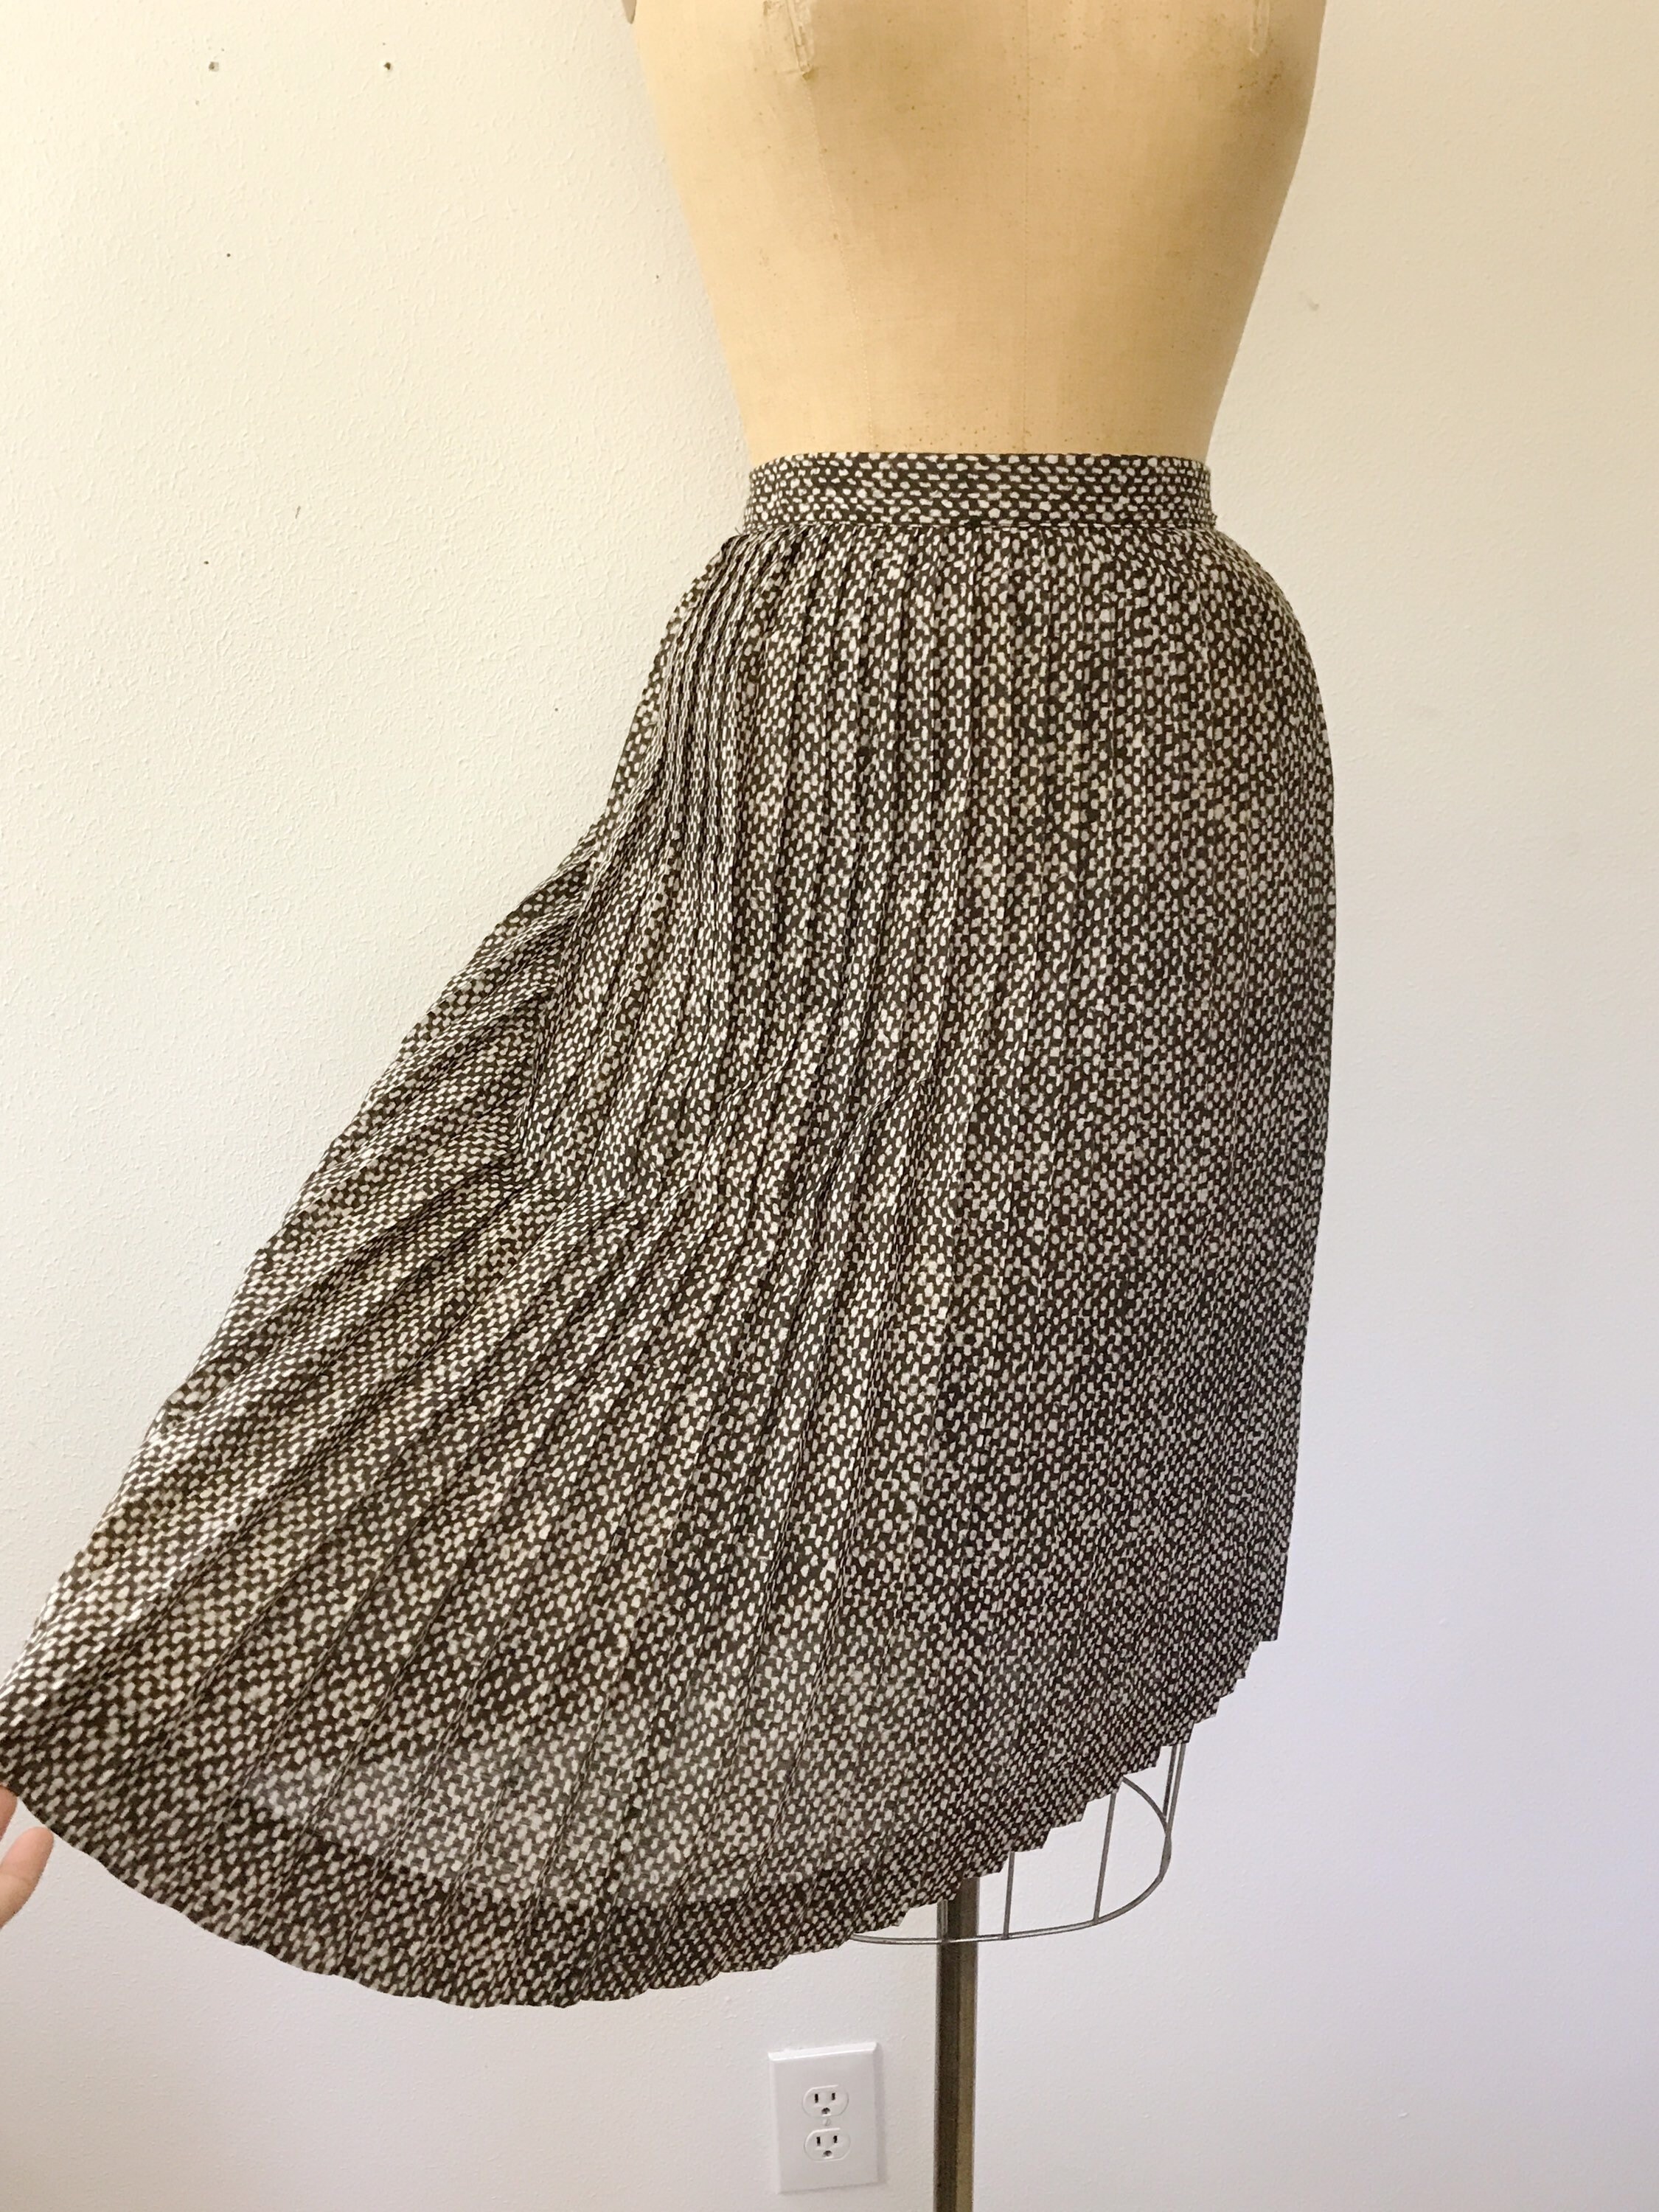 SALE 60s vintage skirt / animal print skirt / XL skirt